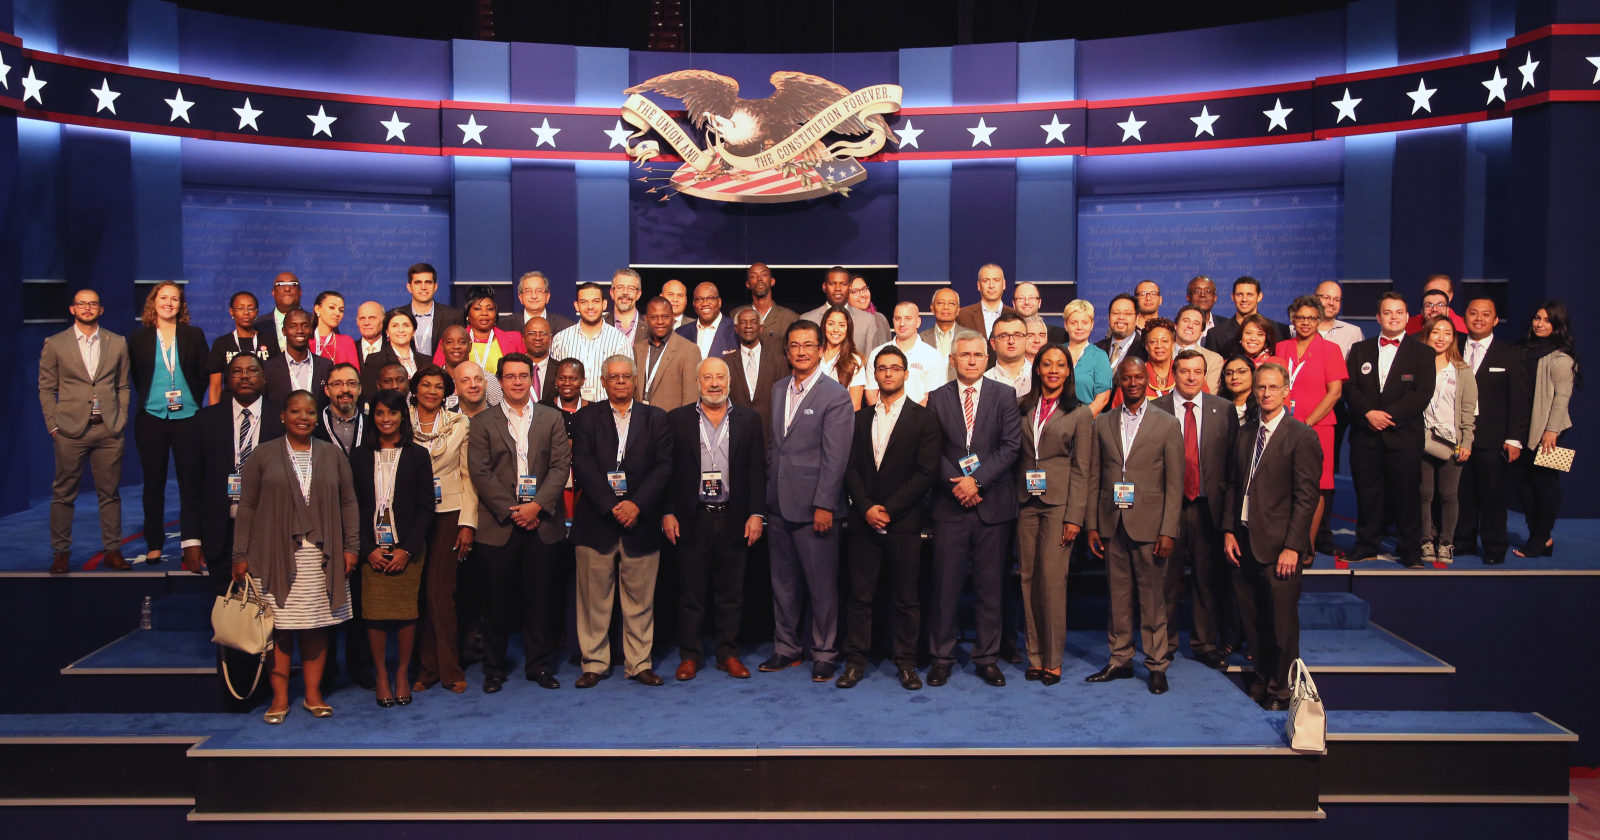 Debate Practitioners Share Lessons at Final U.S. Presidential Debate